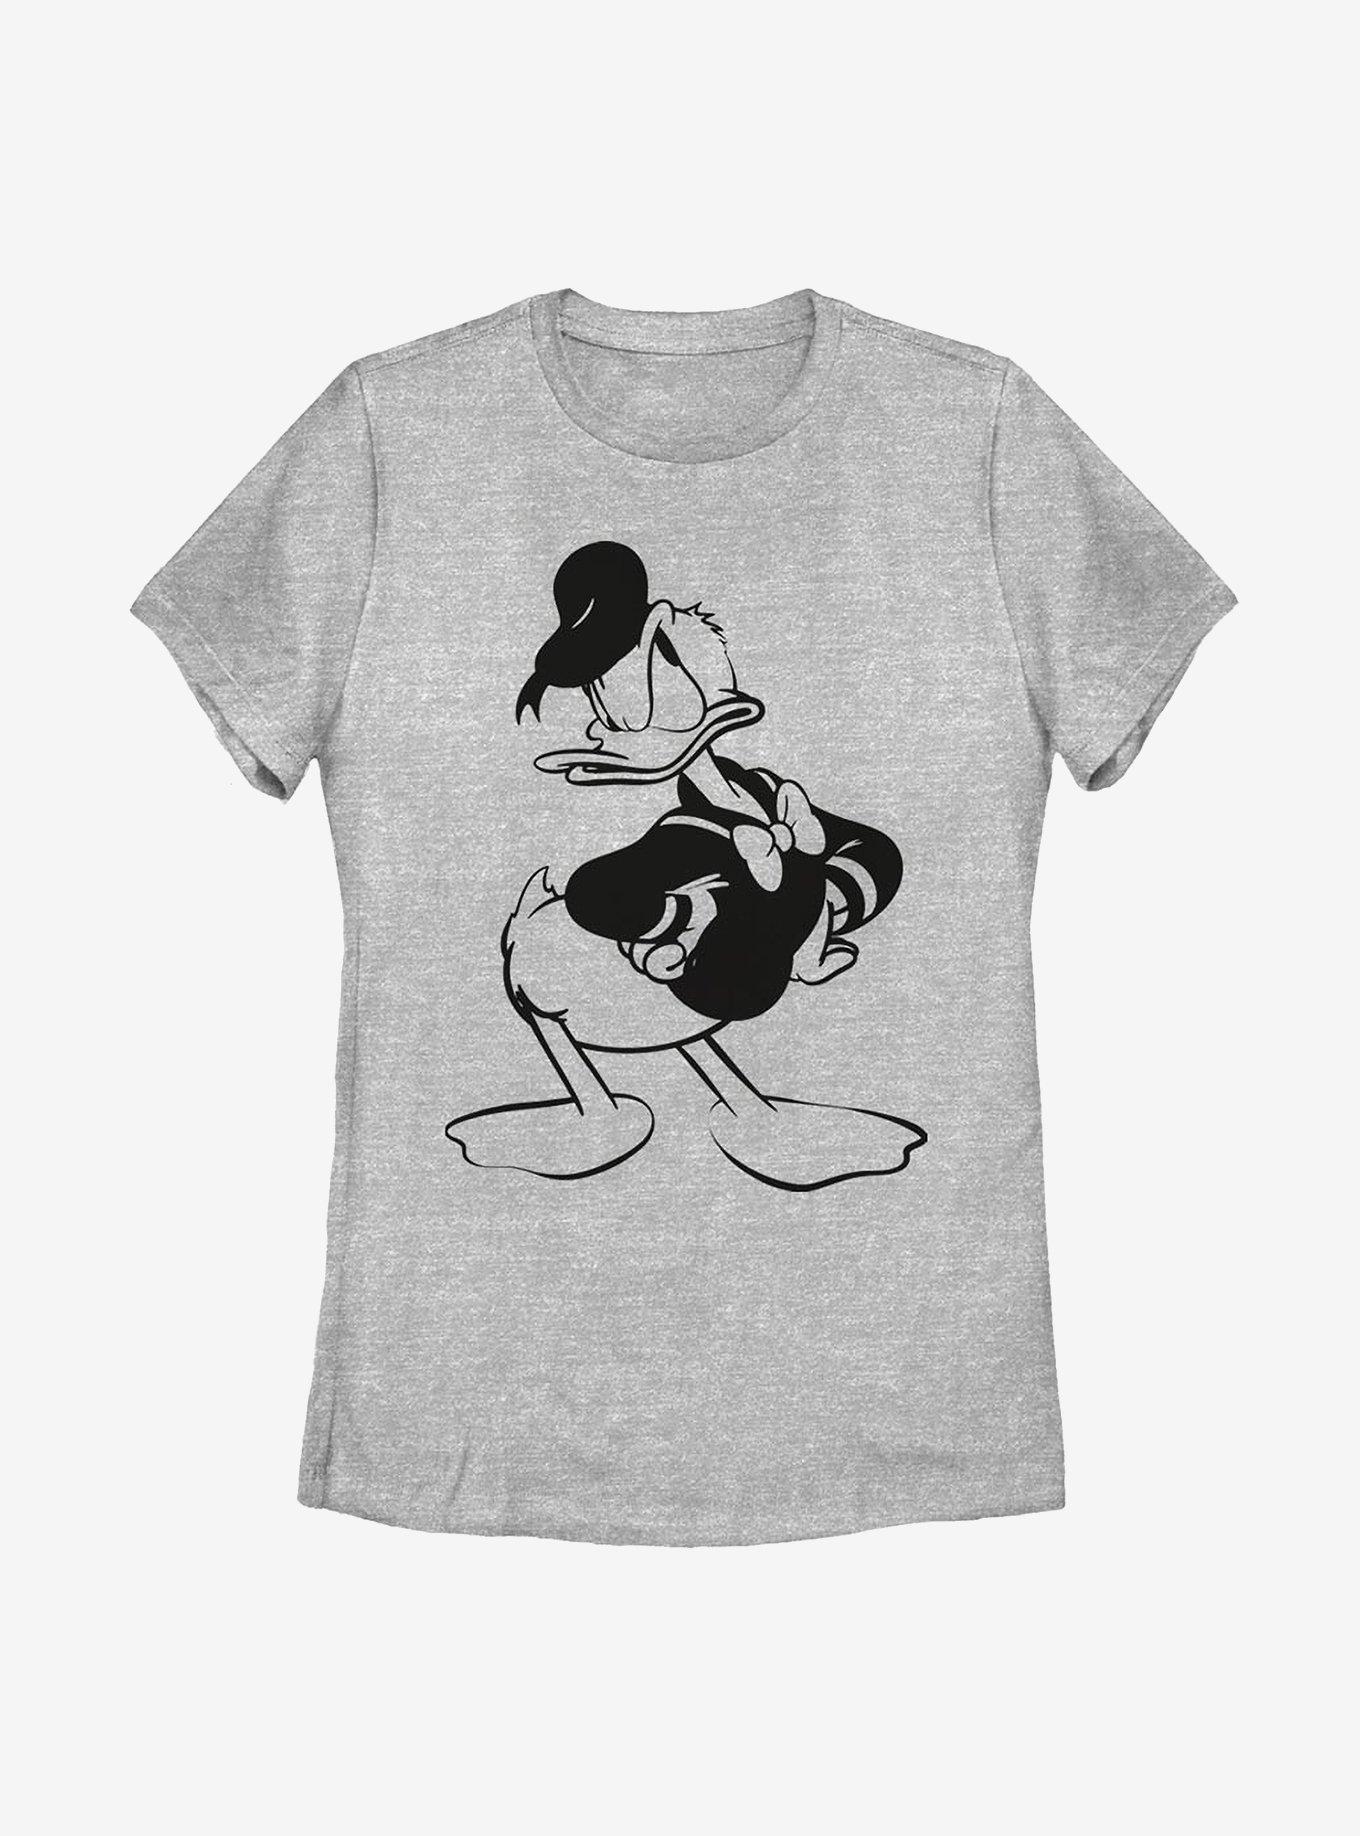 Bird Collective Shirts Ducks T-Shirt XL / Vintage Black